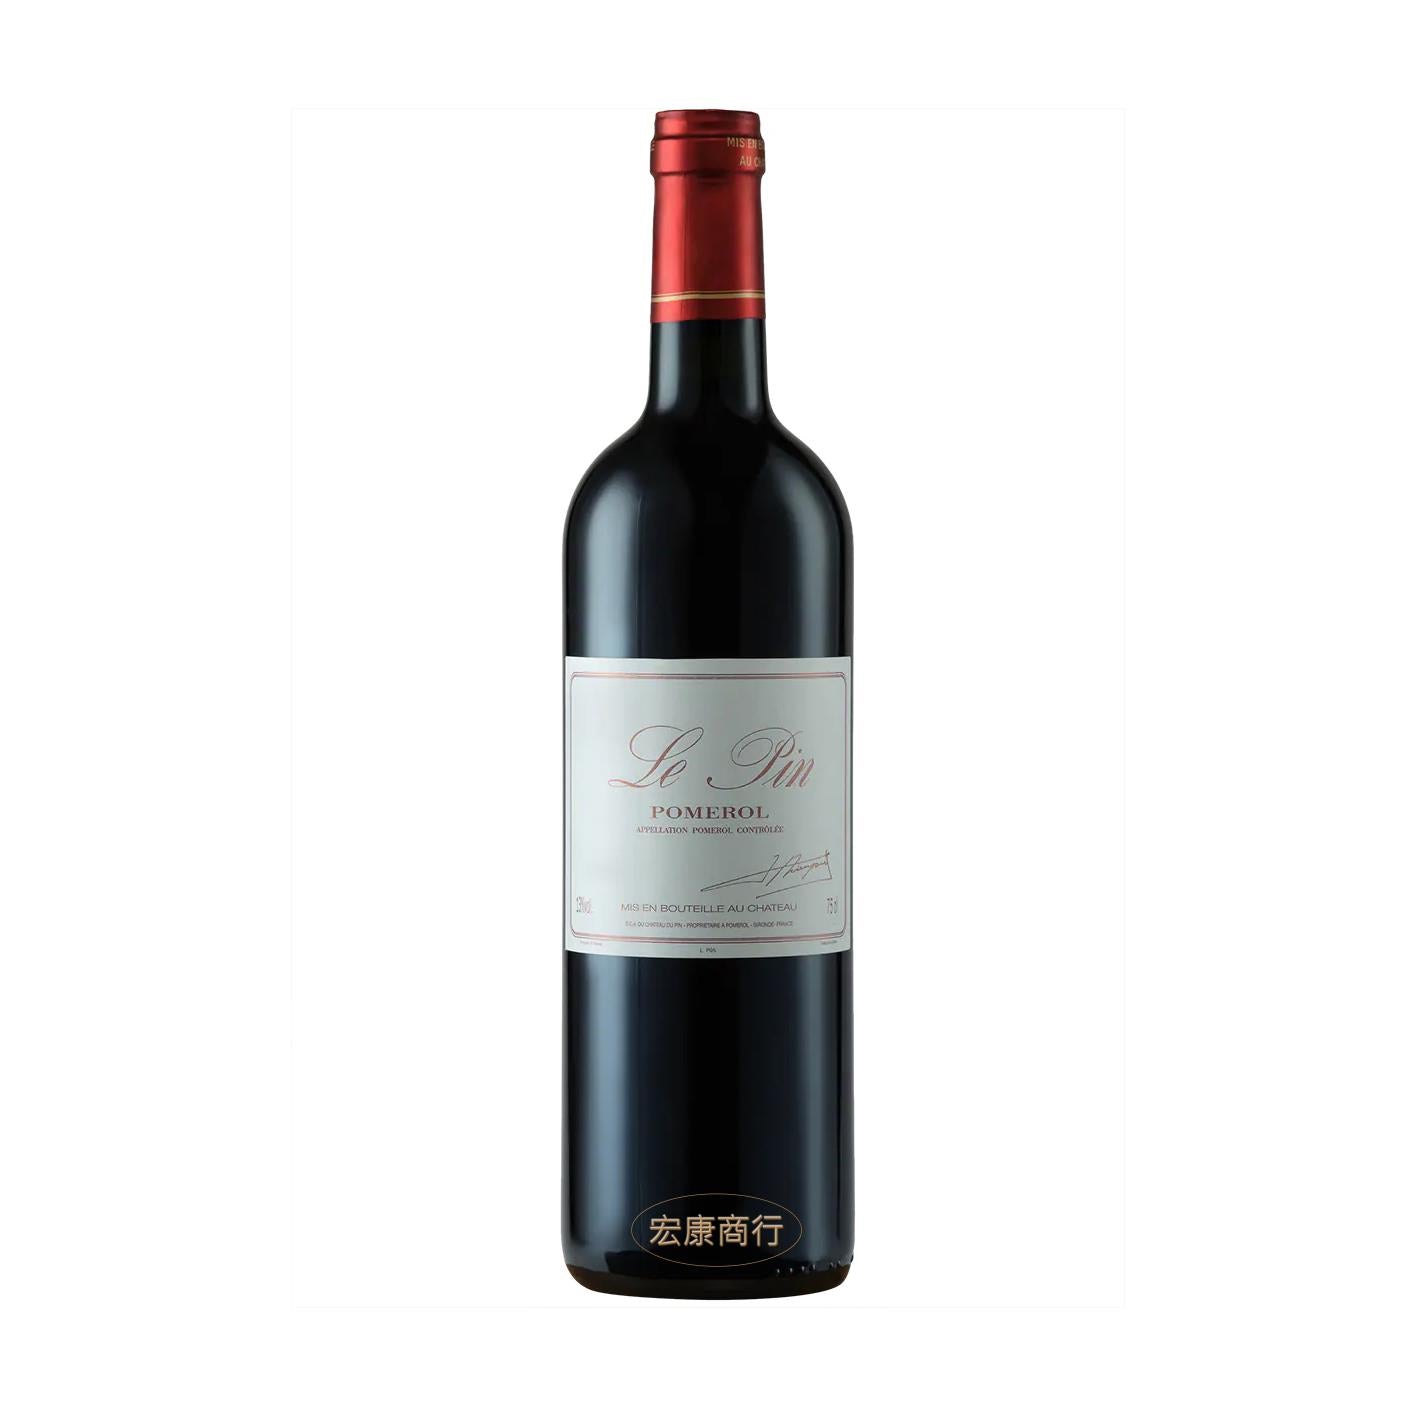 Le Pin Pomerol 2000（裡鵬酒莊紅葡萄酒2000年）收購